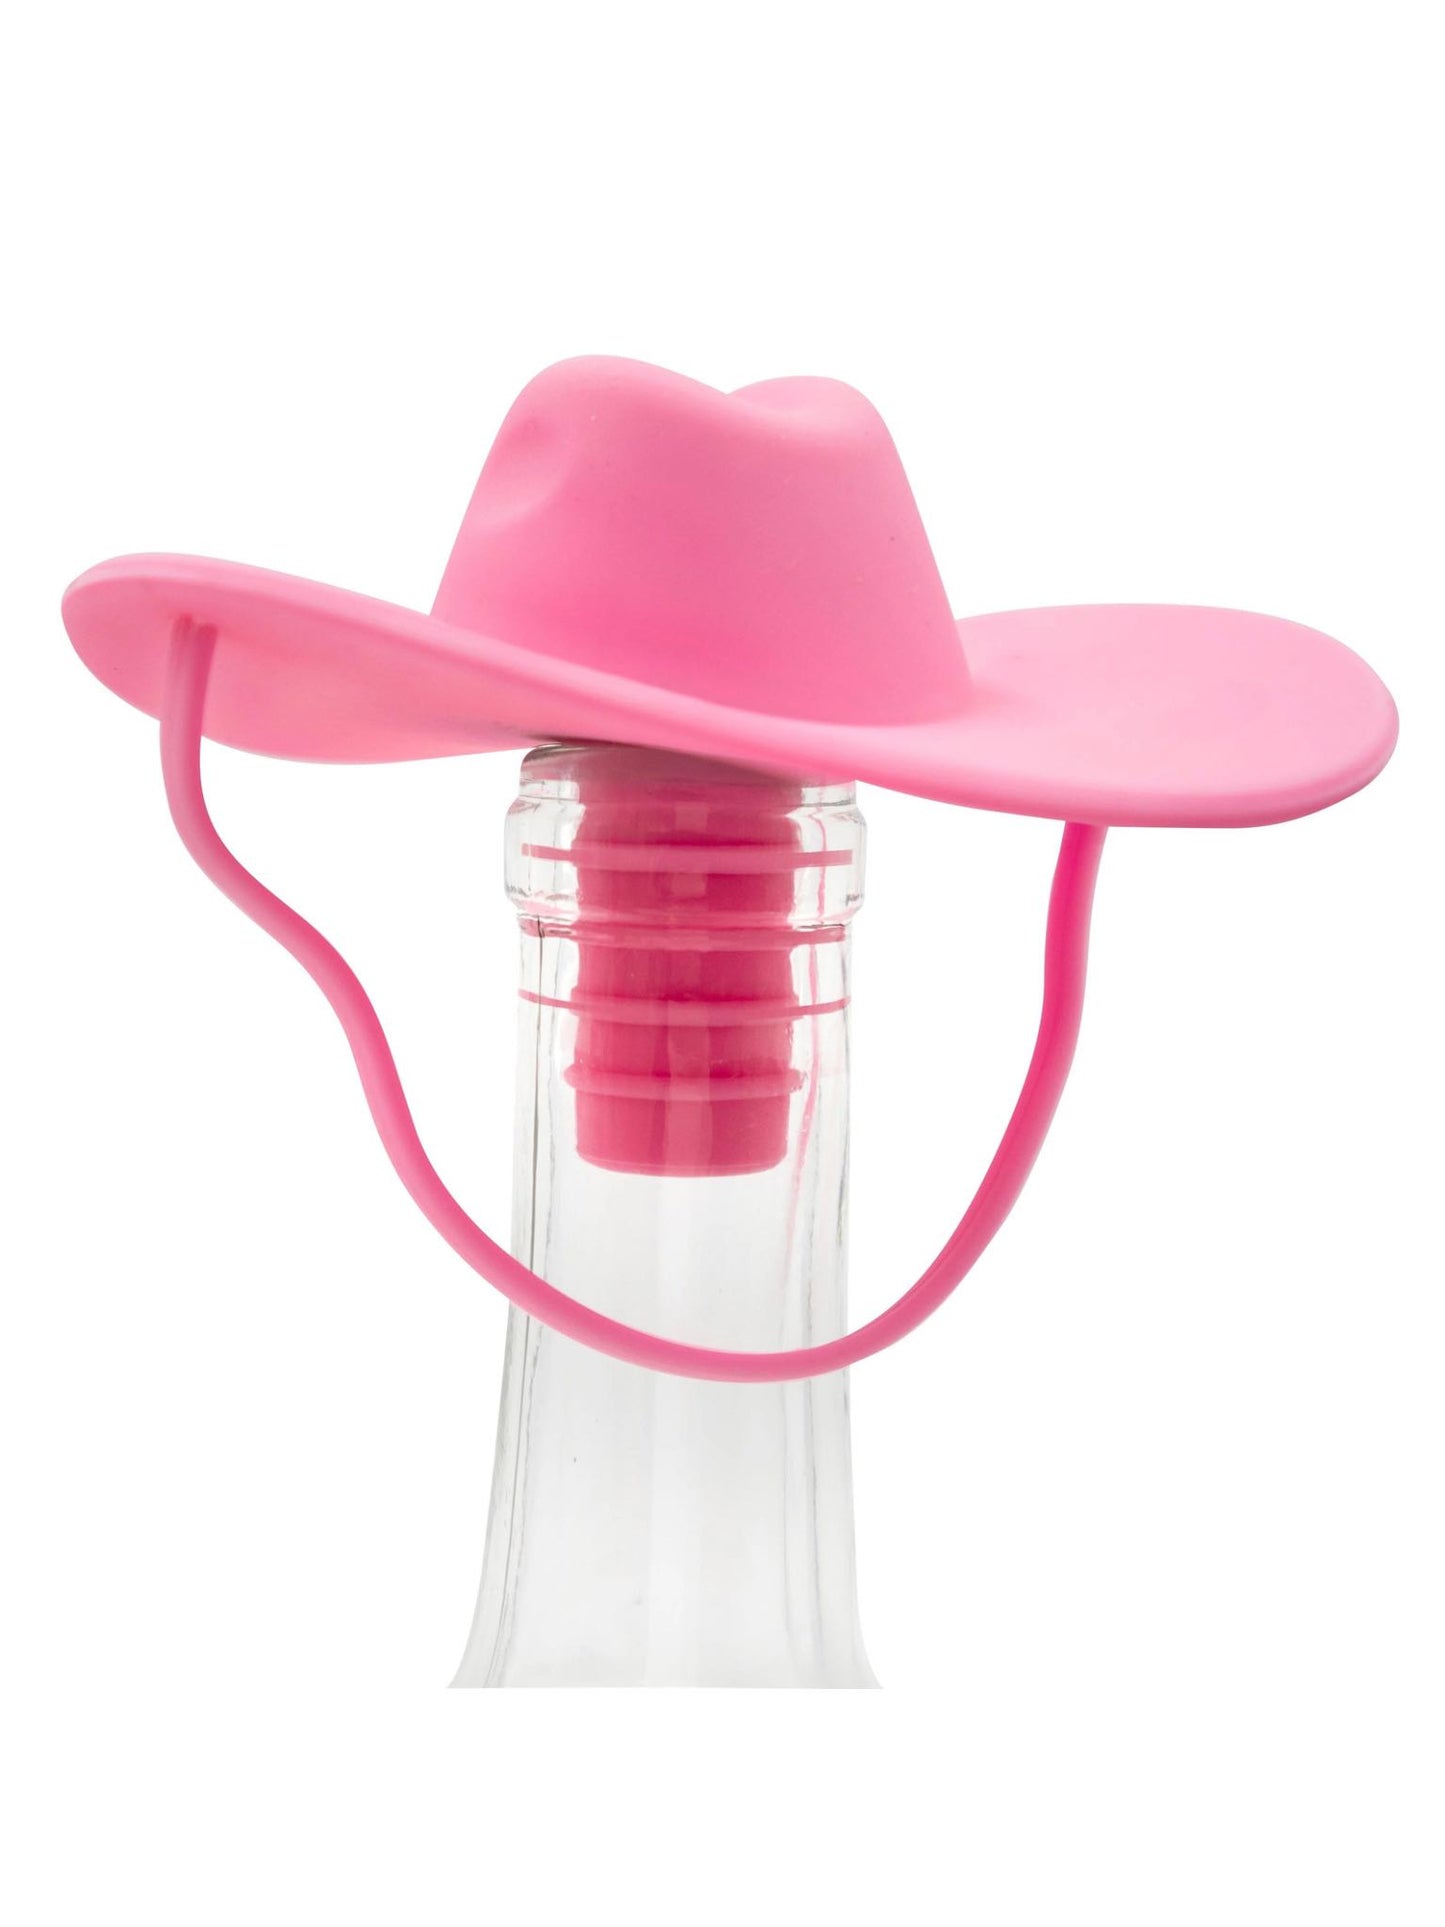 cowboy hat bottle stopper